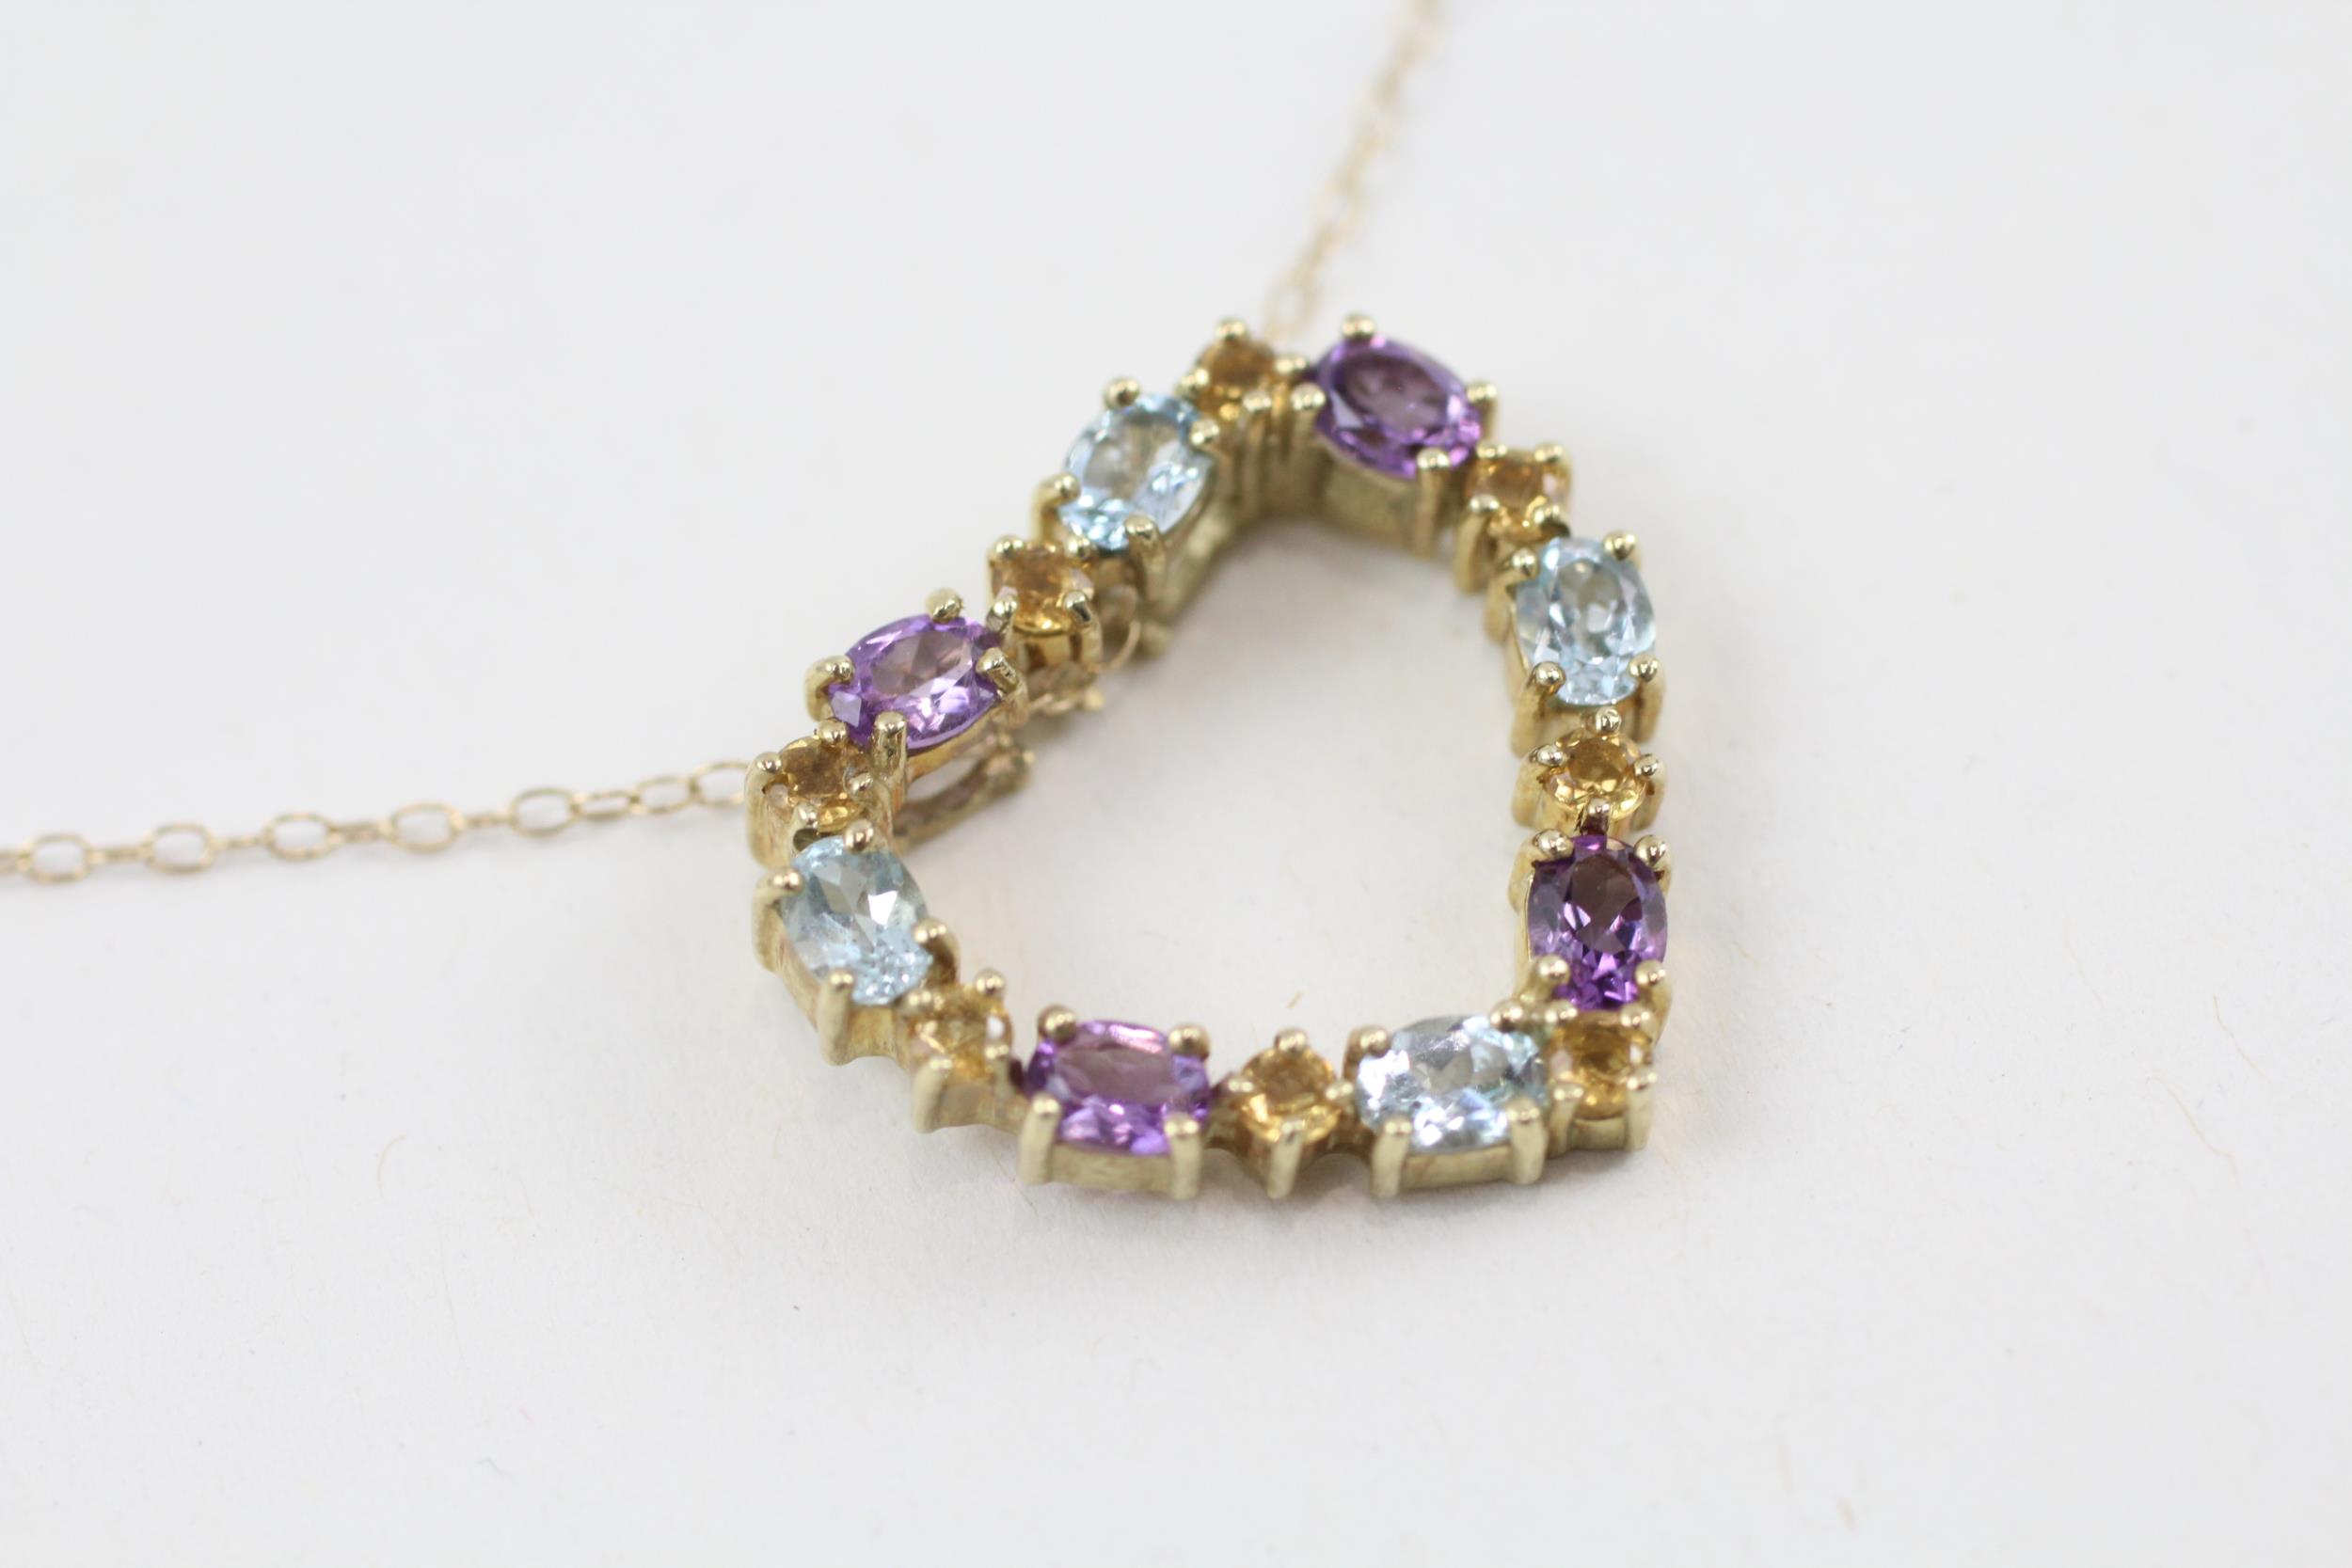 9ct gold multi-gemstone heart pendant necklace inc. amethyst, topaz & citrine (3.5g) - Image 2 of 6